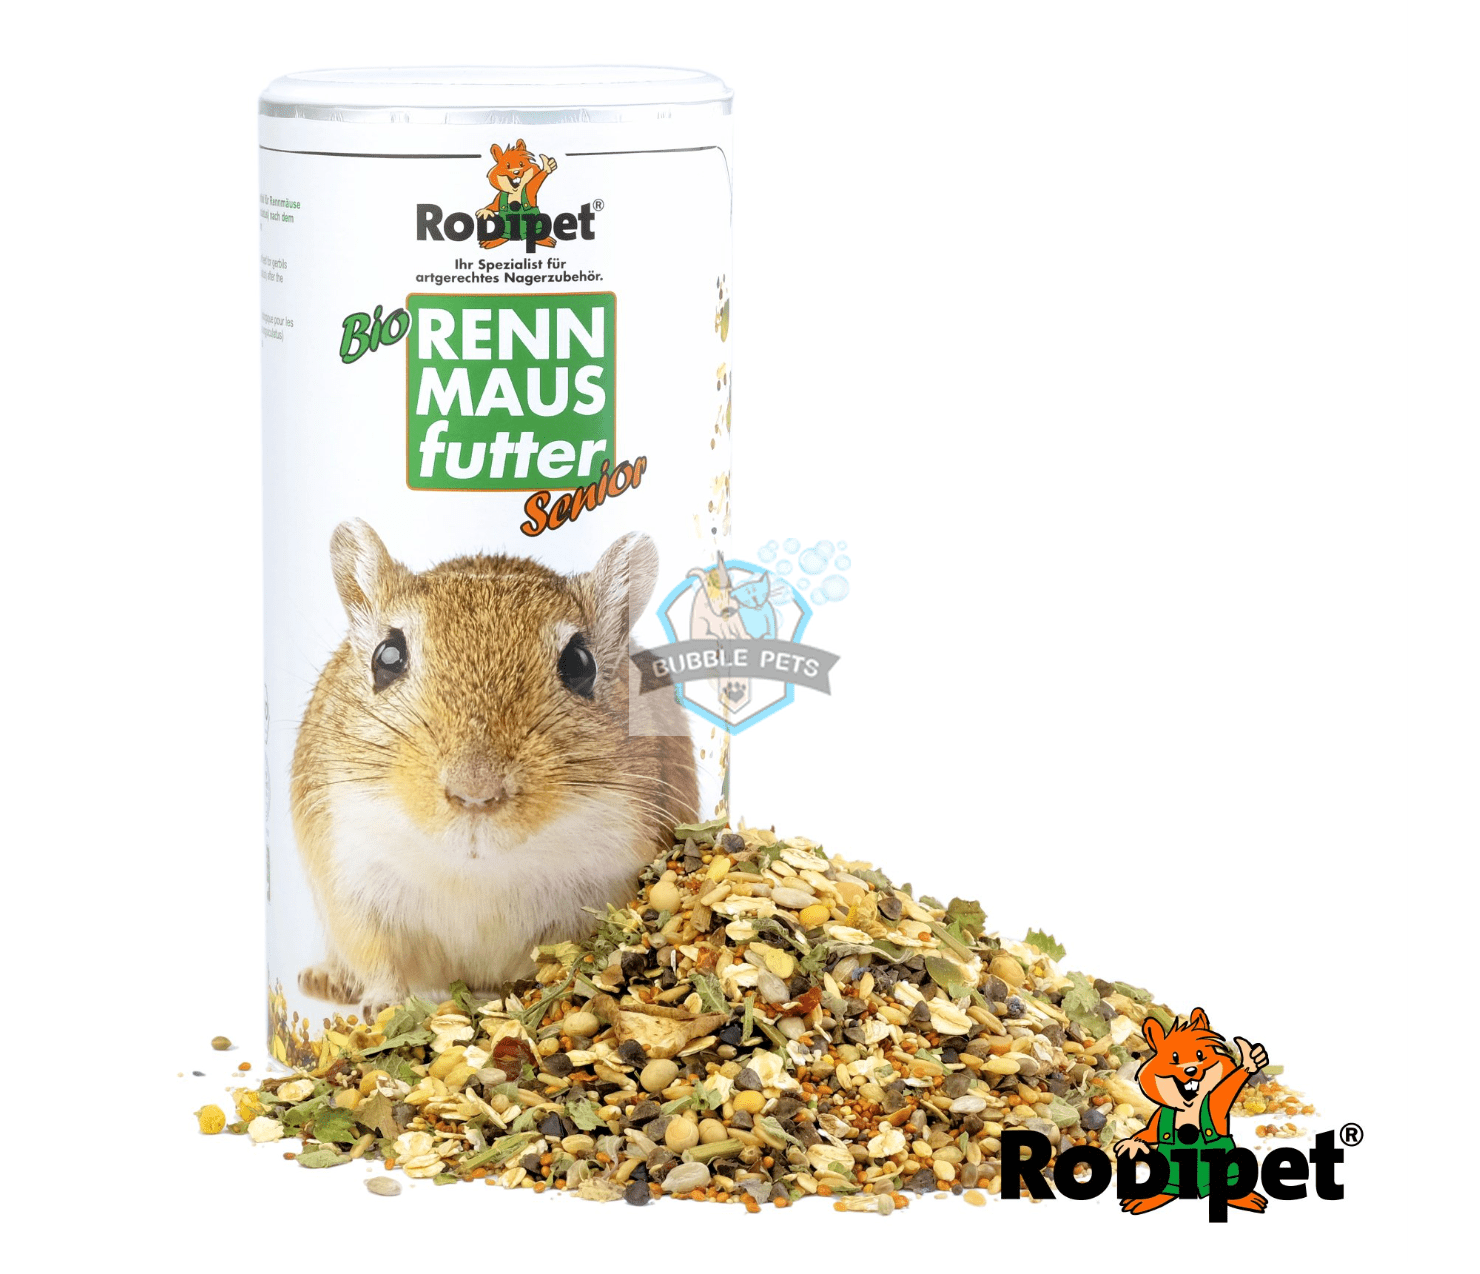 RodiPet Organic Gerbil Hamster Food (Senior)